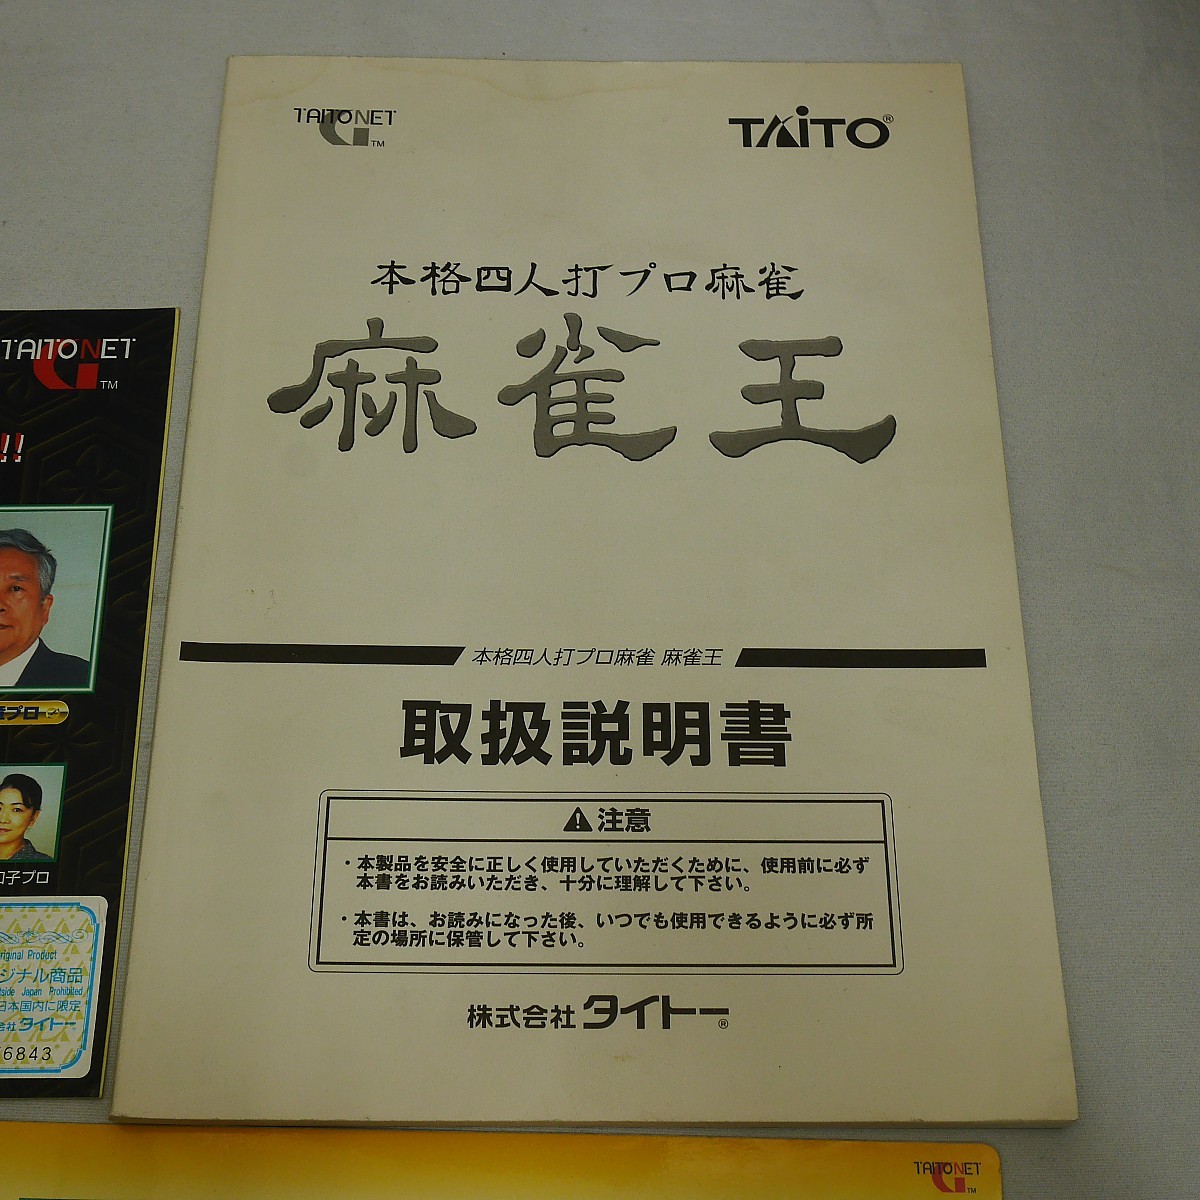  original instrument + owner manual + obi 1 pcs mah-jong .TAITO